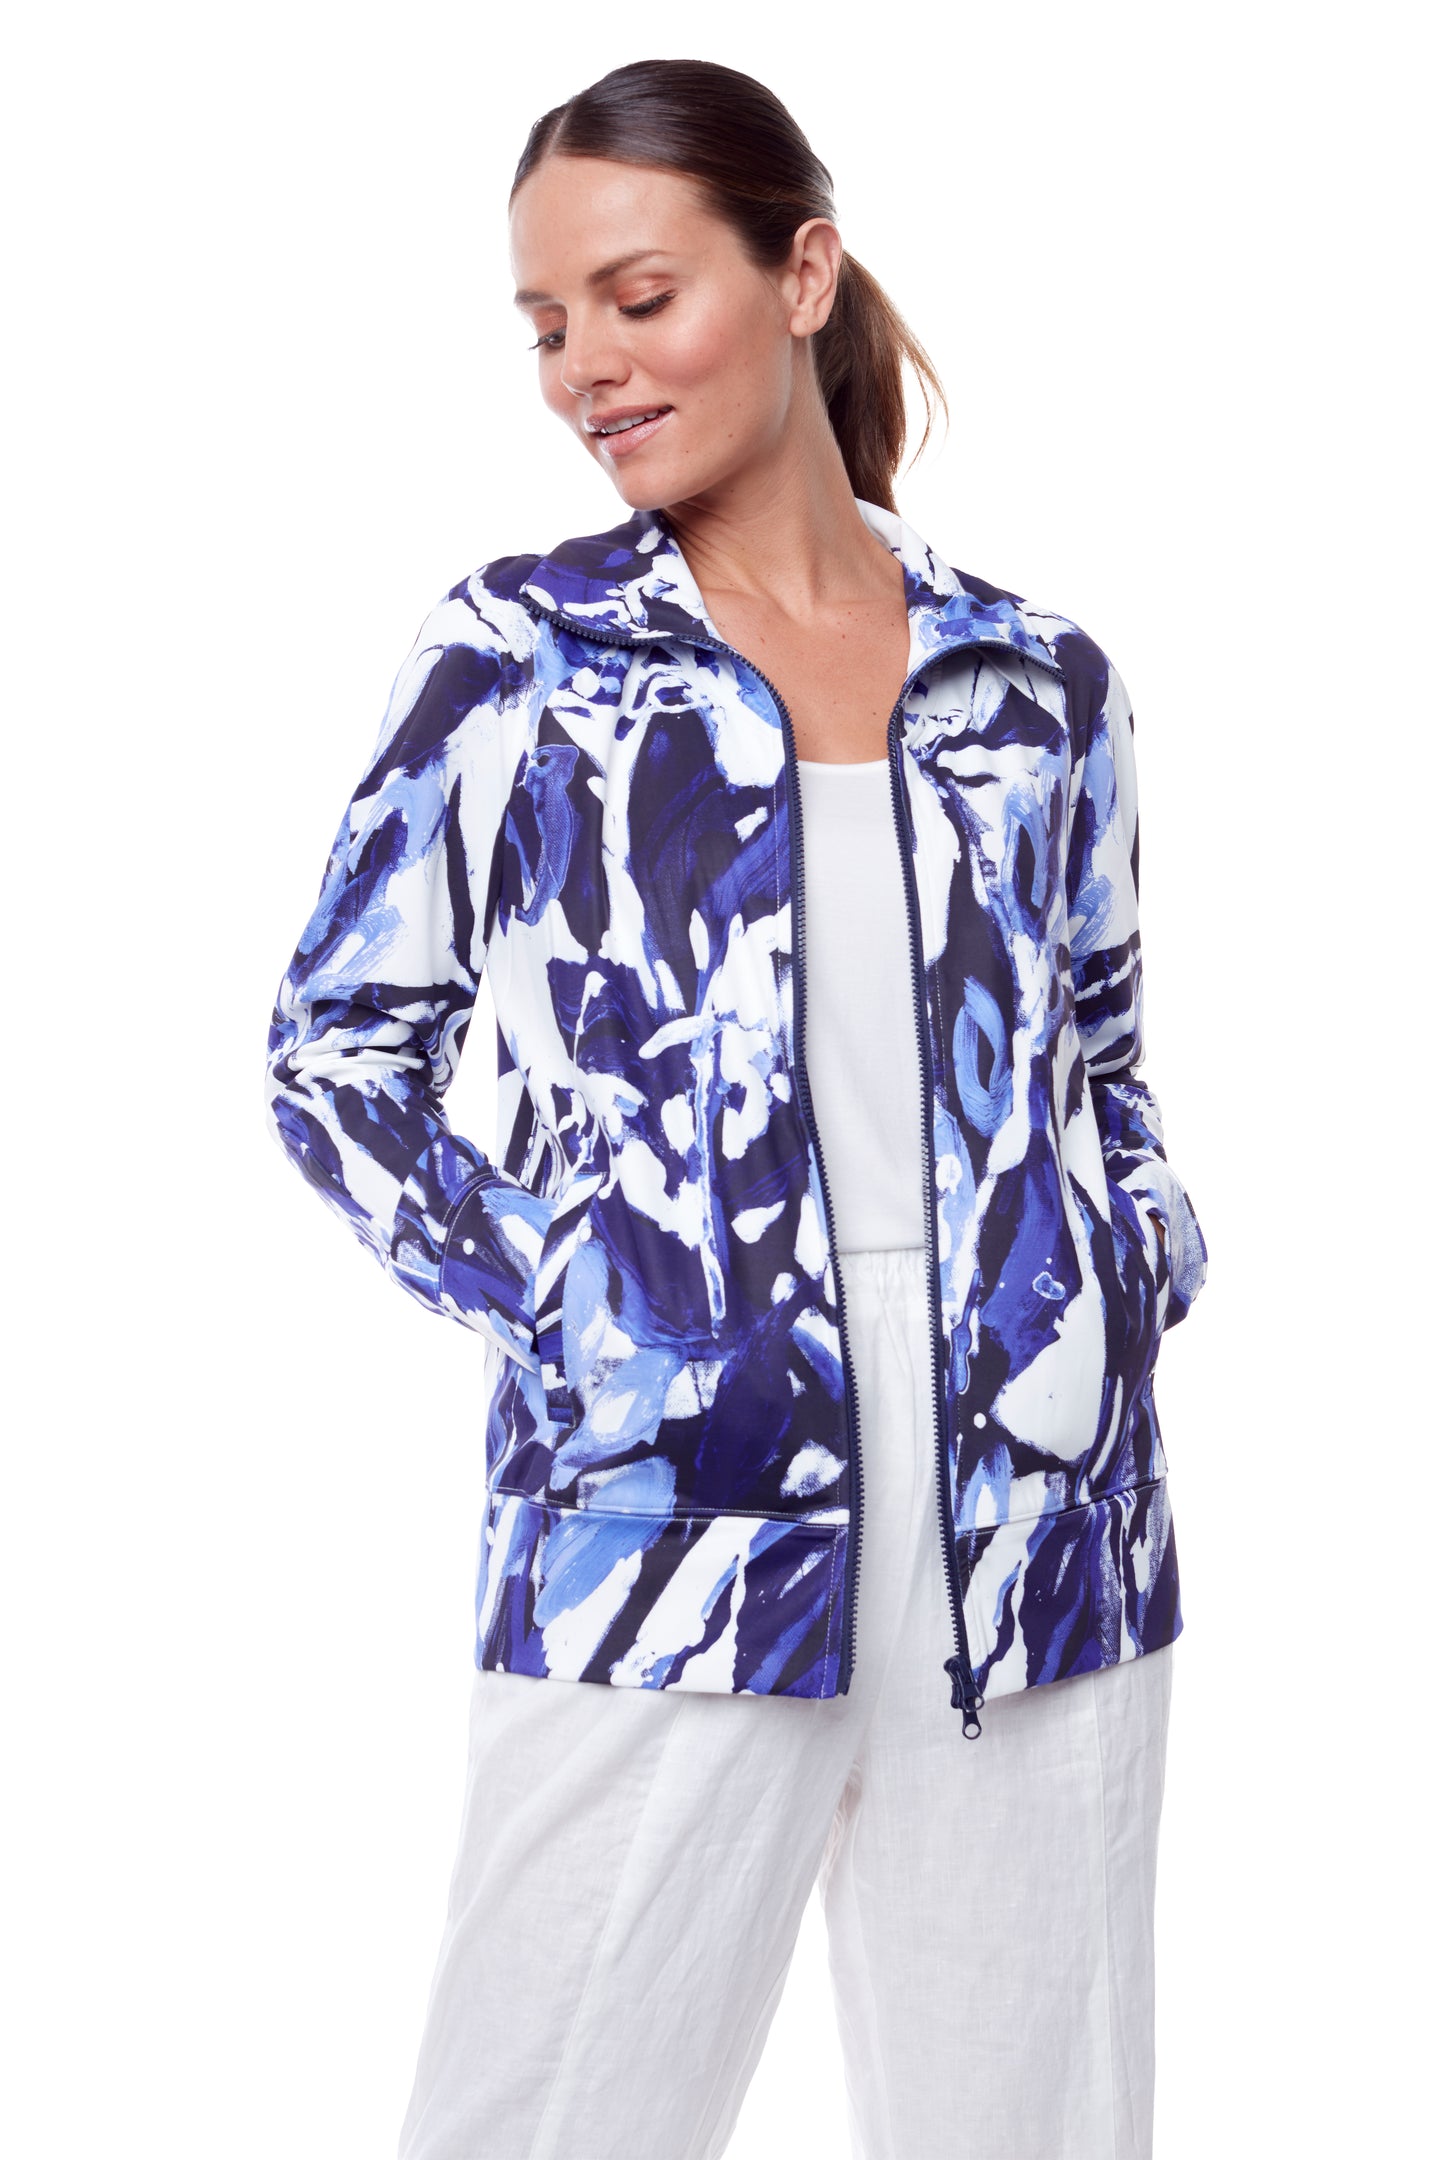 Blue & White: At Lib. zip-front jacket